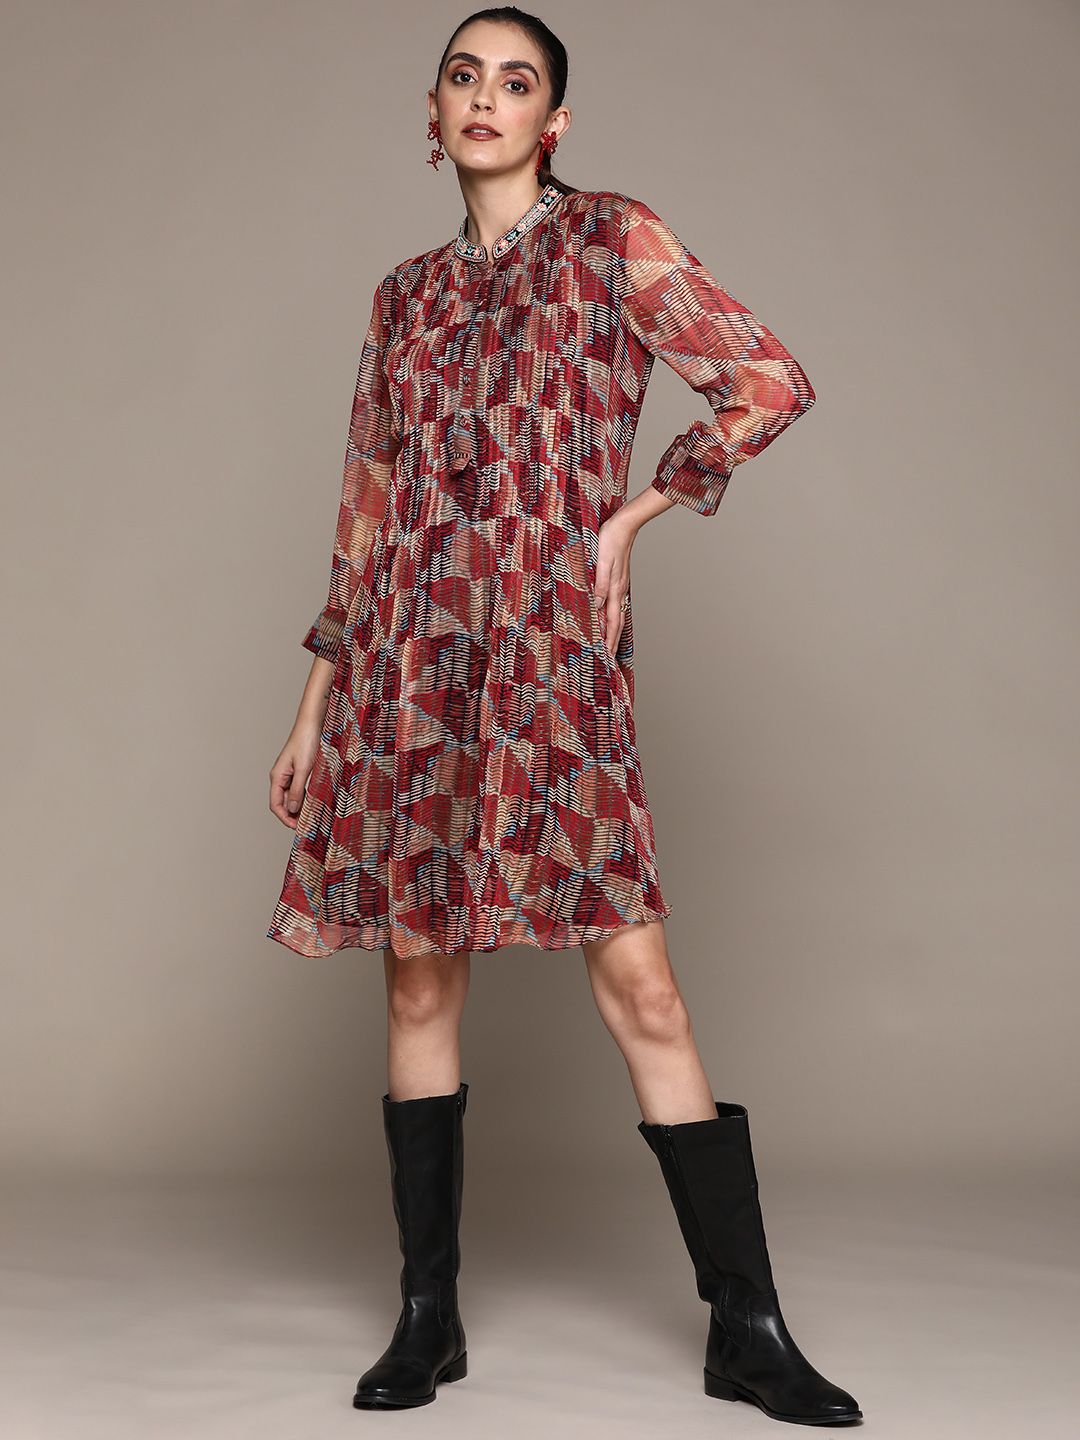 Ritu Kumar Multicoloured Chiffon A-Line Dress Price in India